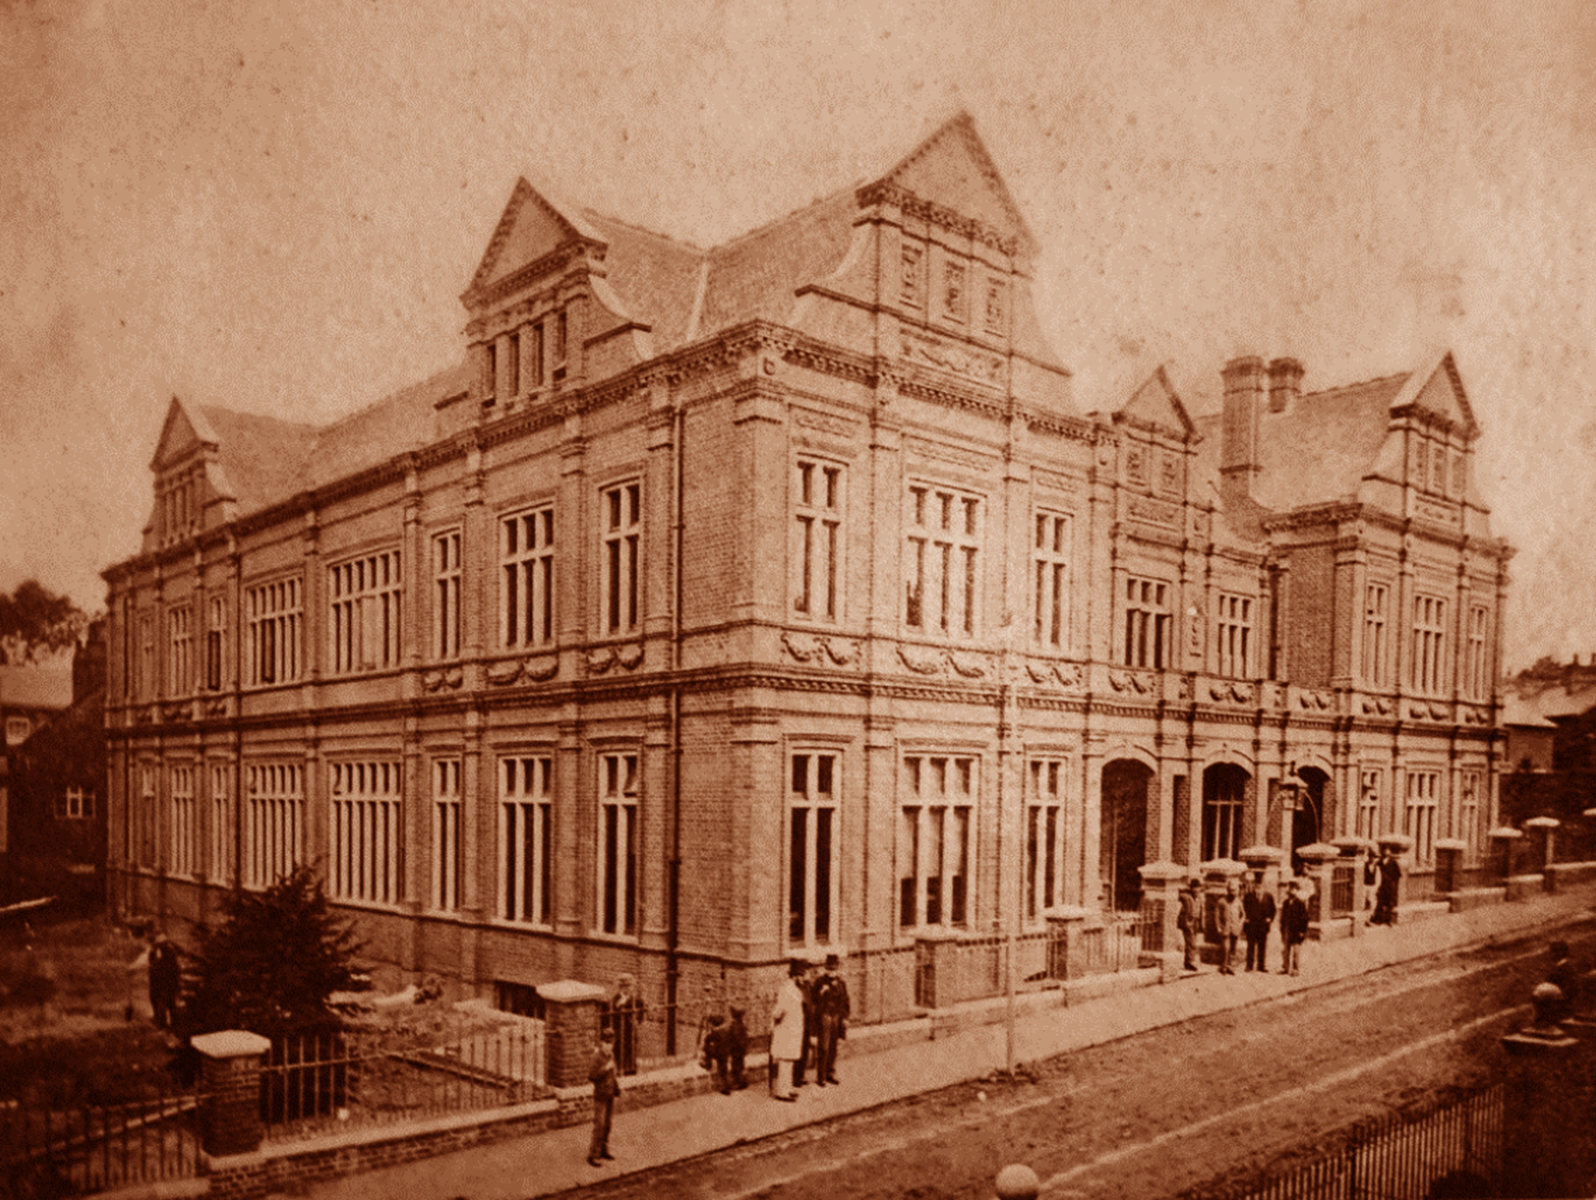 Ipswich Museum - Historic Image 1881